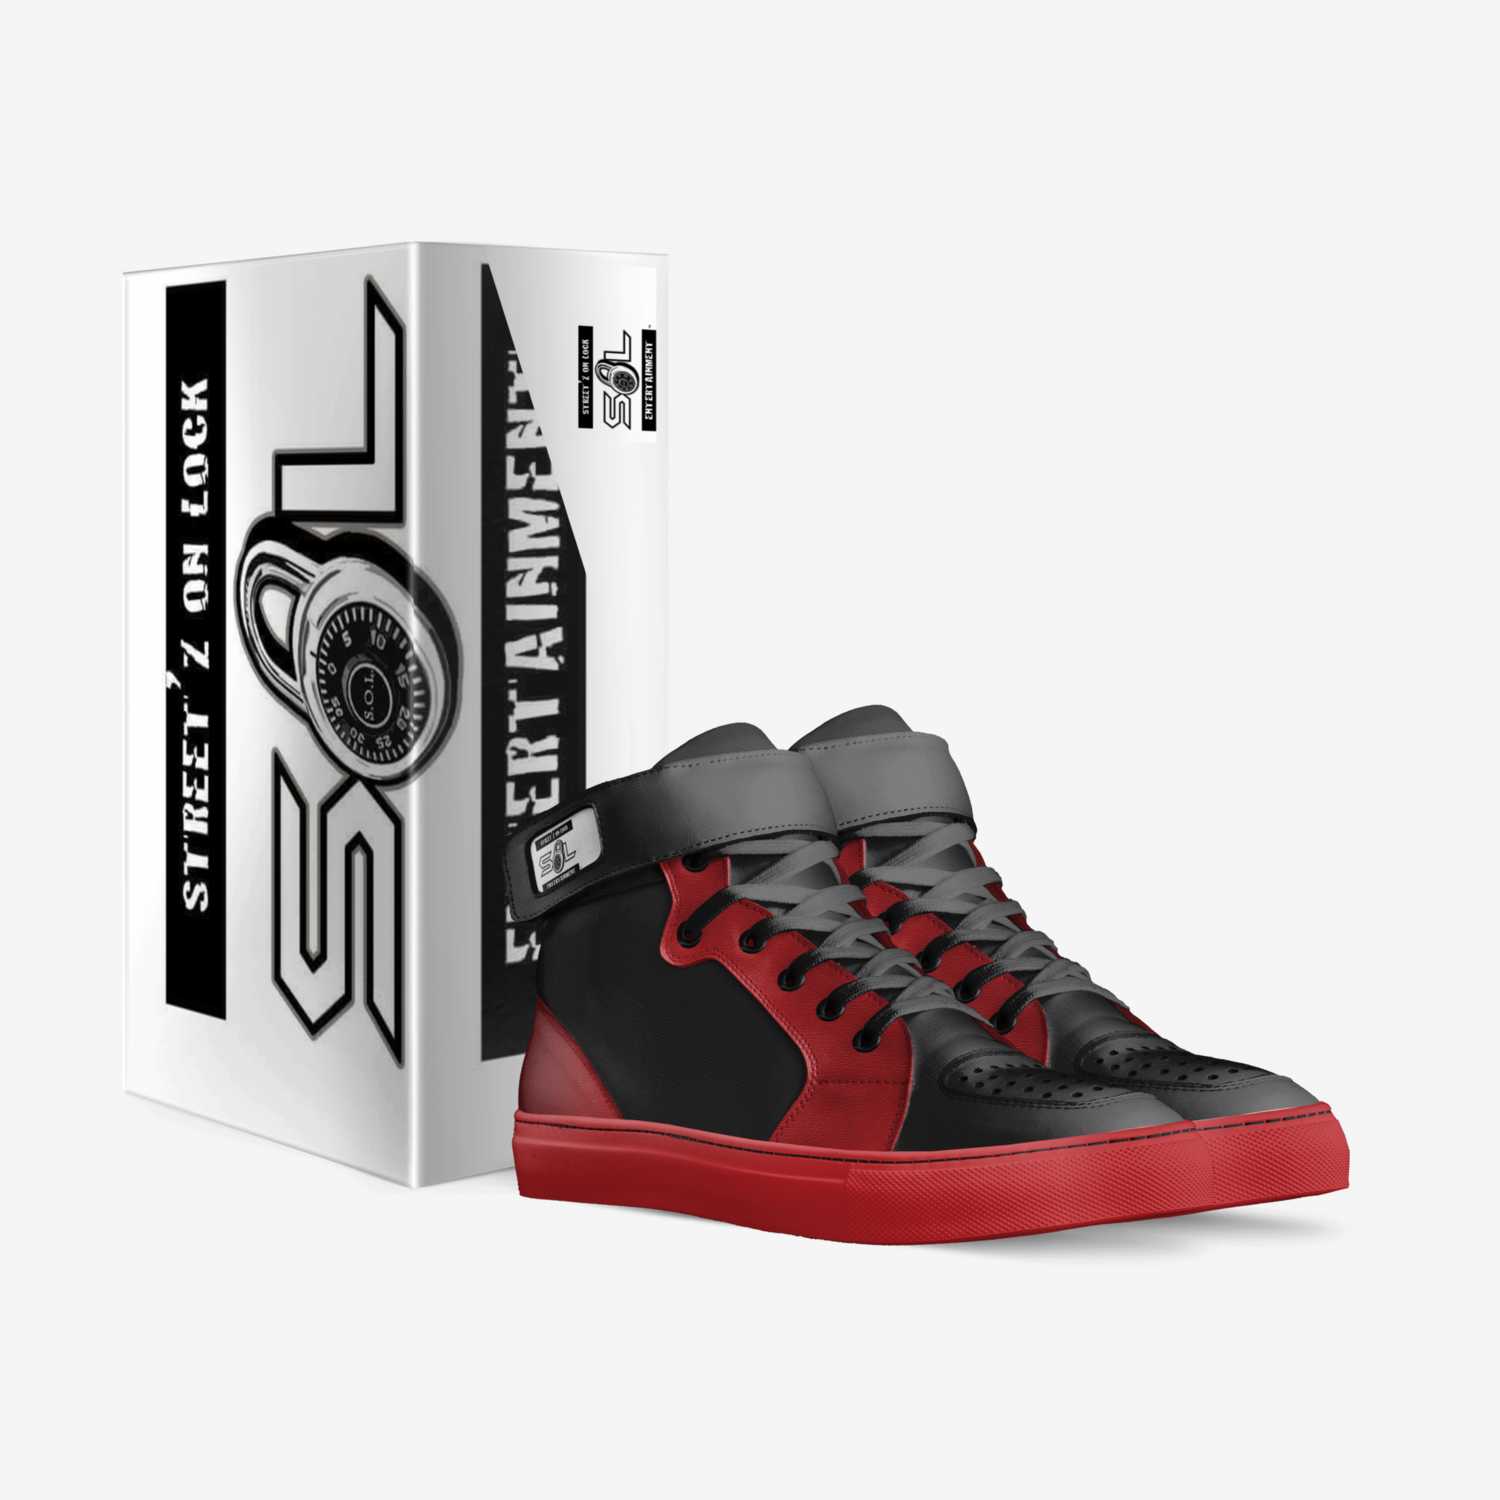 Black Rose custom made in Italy shoes by Damien Dandridge | Box view